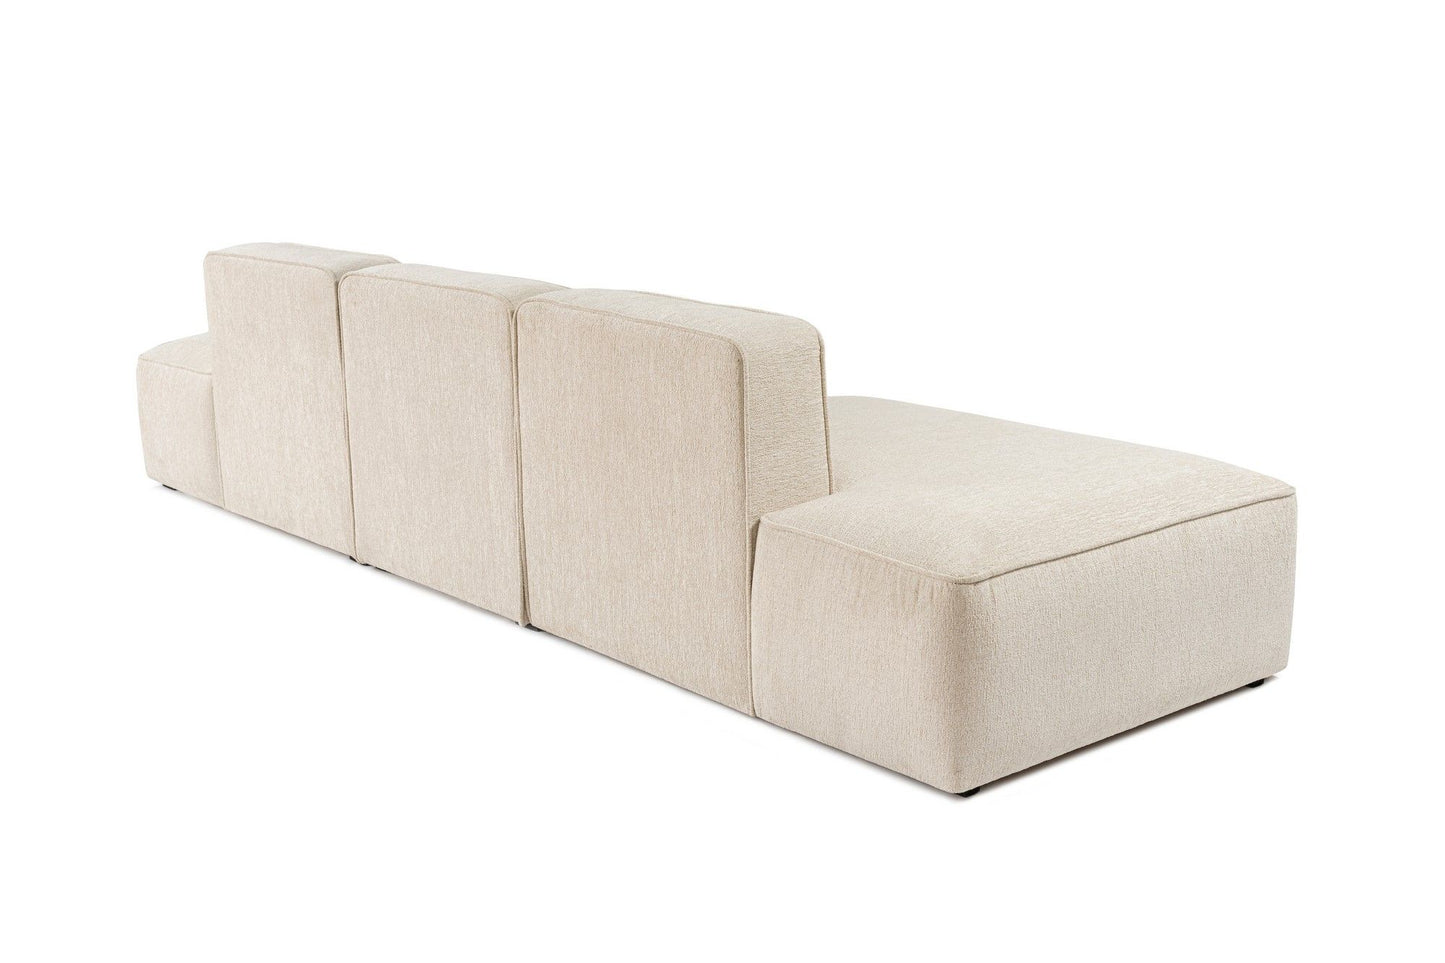 MATT Design | More sofa - 3 moduler, double open end